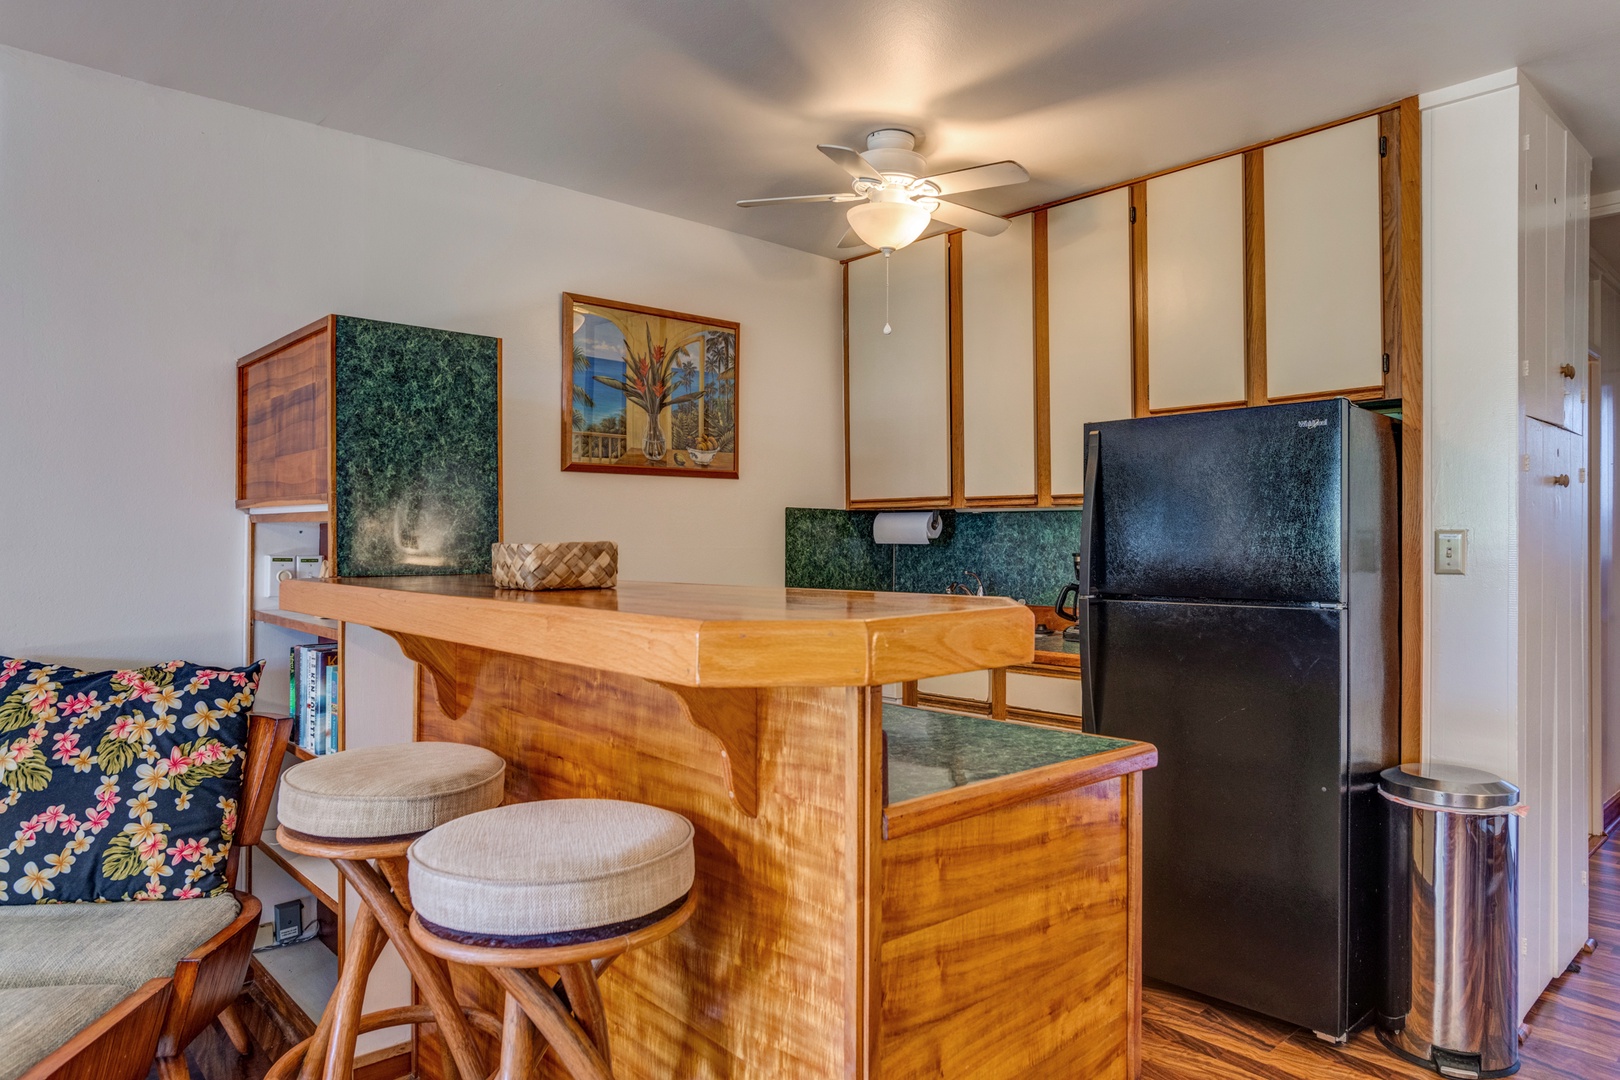 Lahaina Vacation Rentals, Hale Kai 109 - Full Kitchen with bar stools